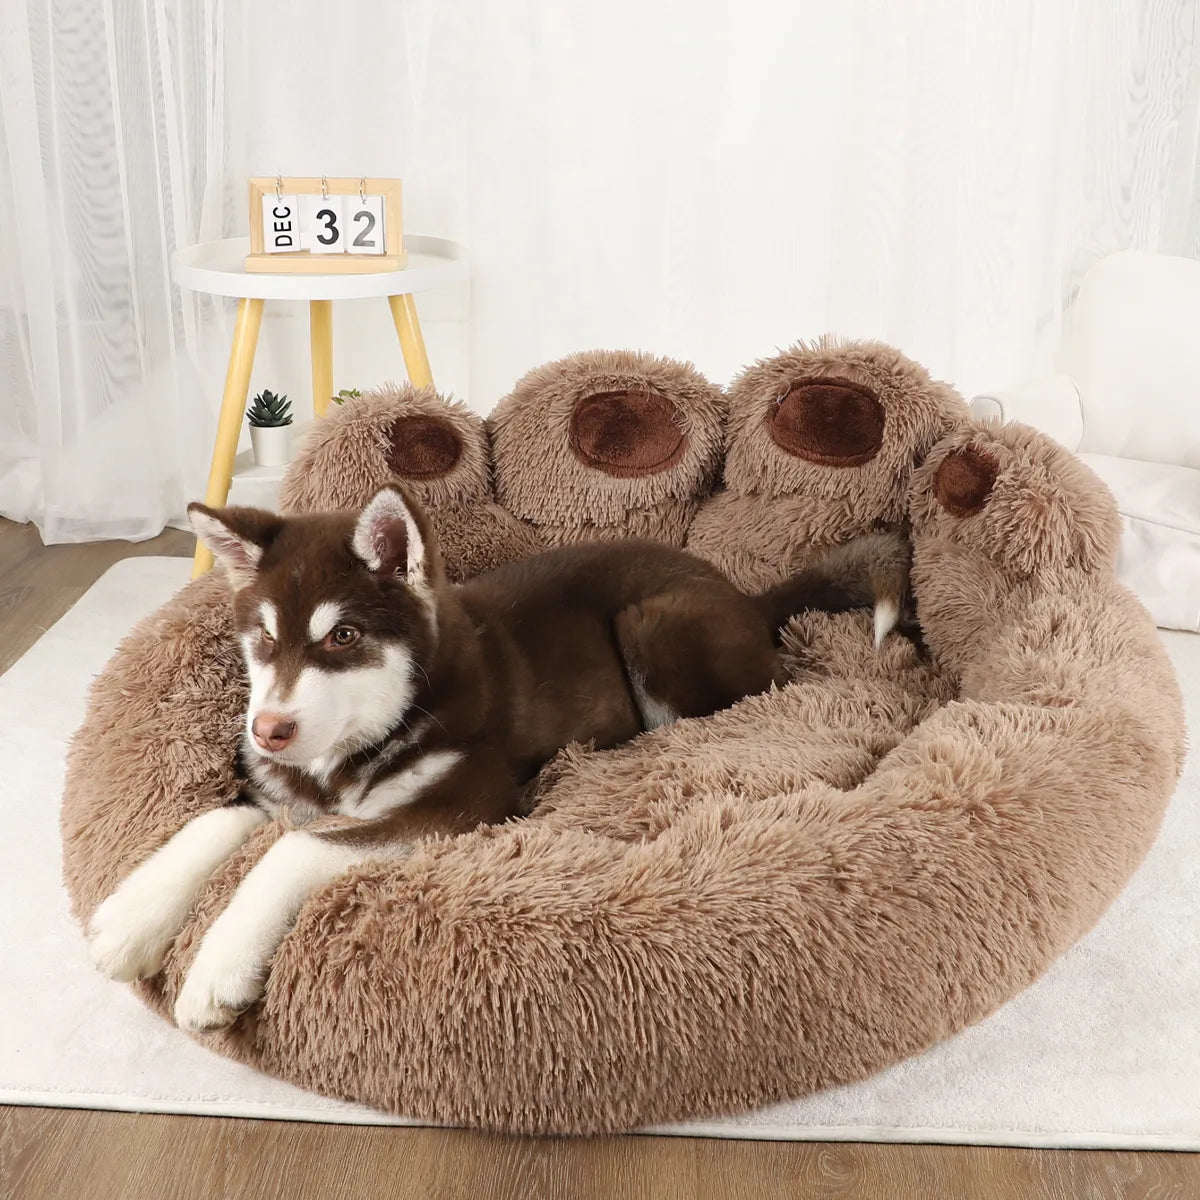 GCB™ Luxury Pets Sofa Bed - GCB™